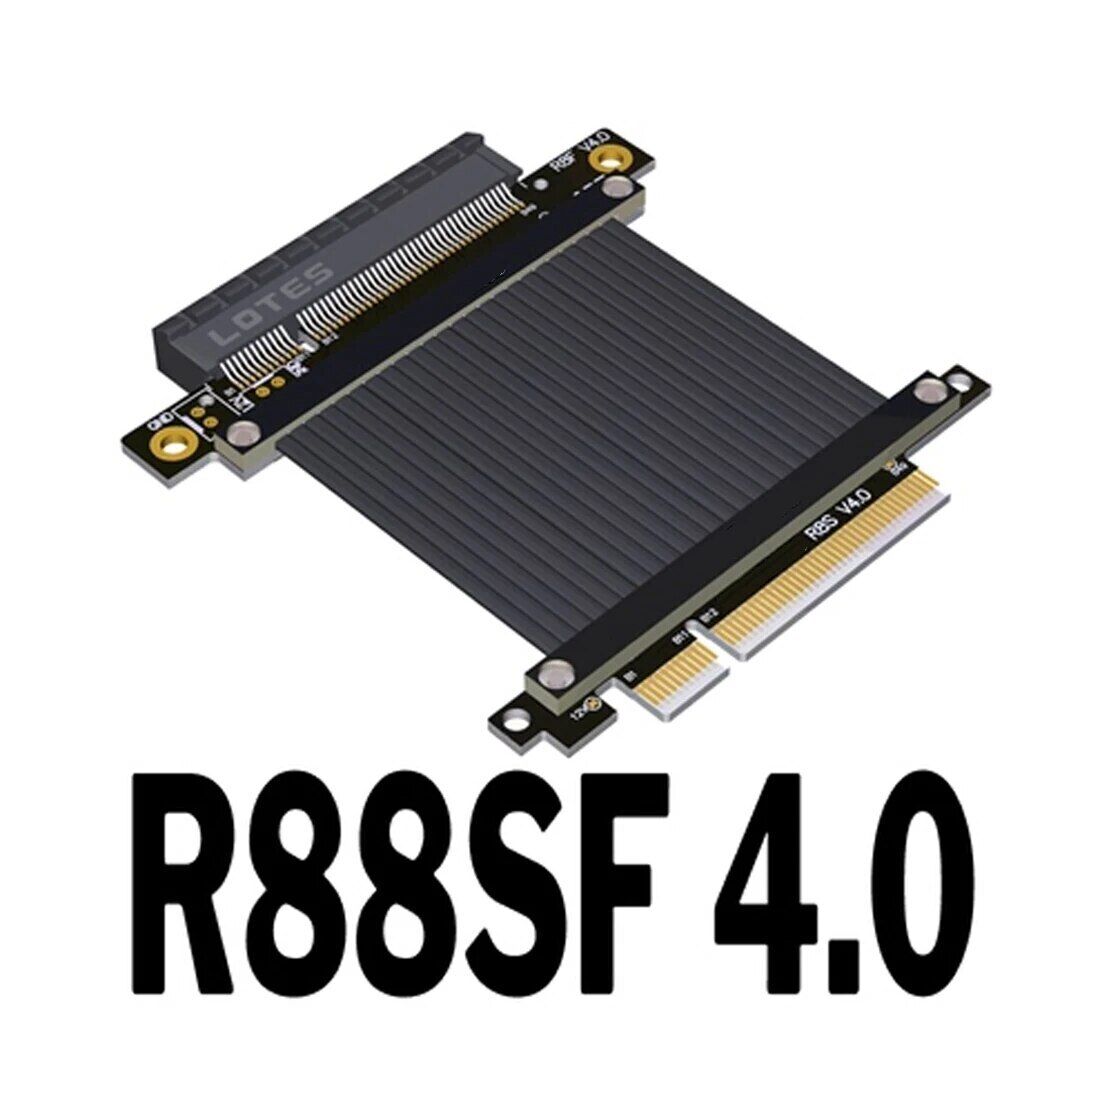 PCIE 4.0 X8 ToX8 Slot Female/Male Cable PCI-E Gen4 8x Adapter Riser GPU Extender